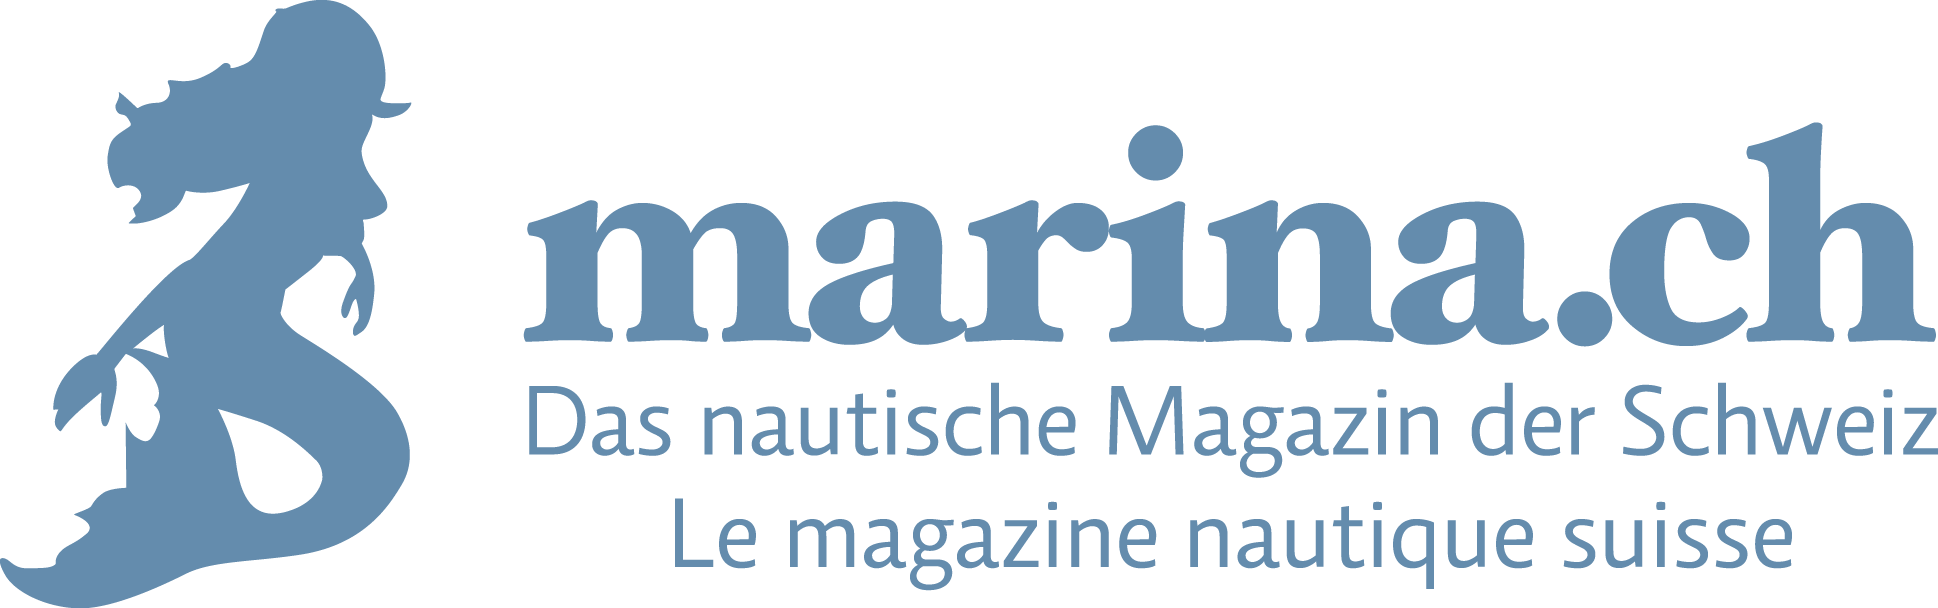 Logo_Marina.png